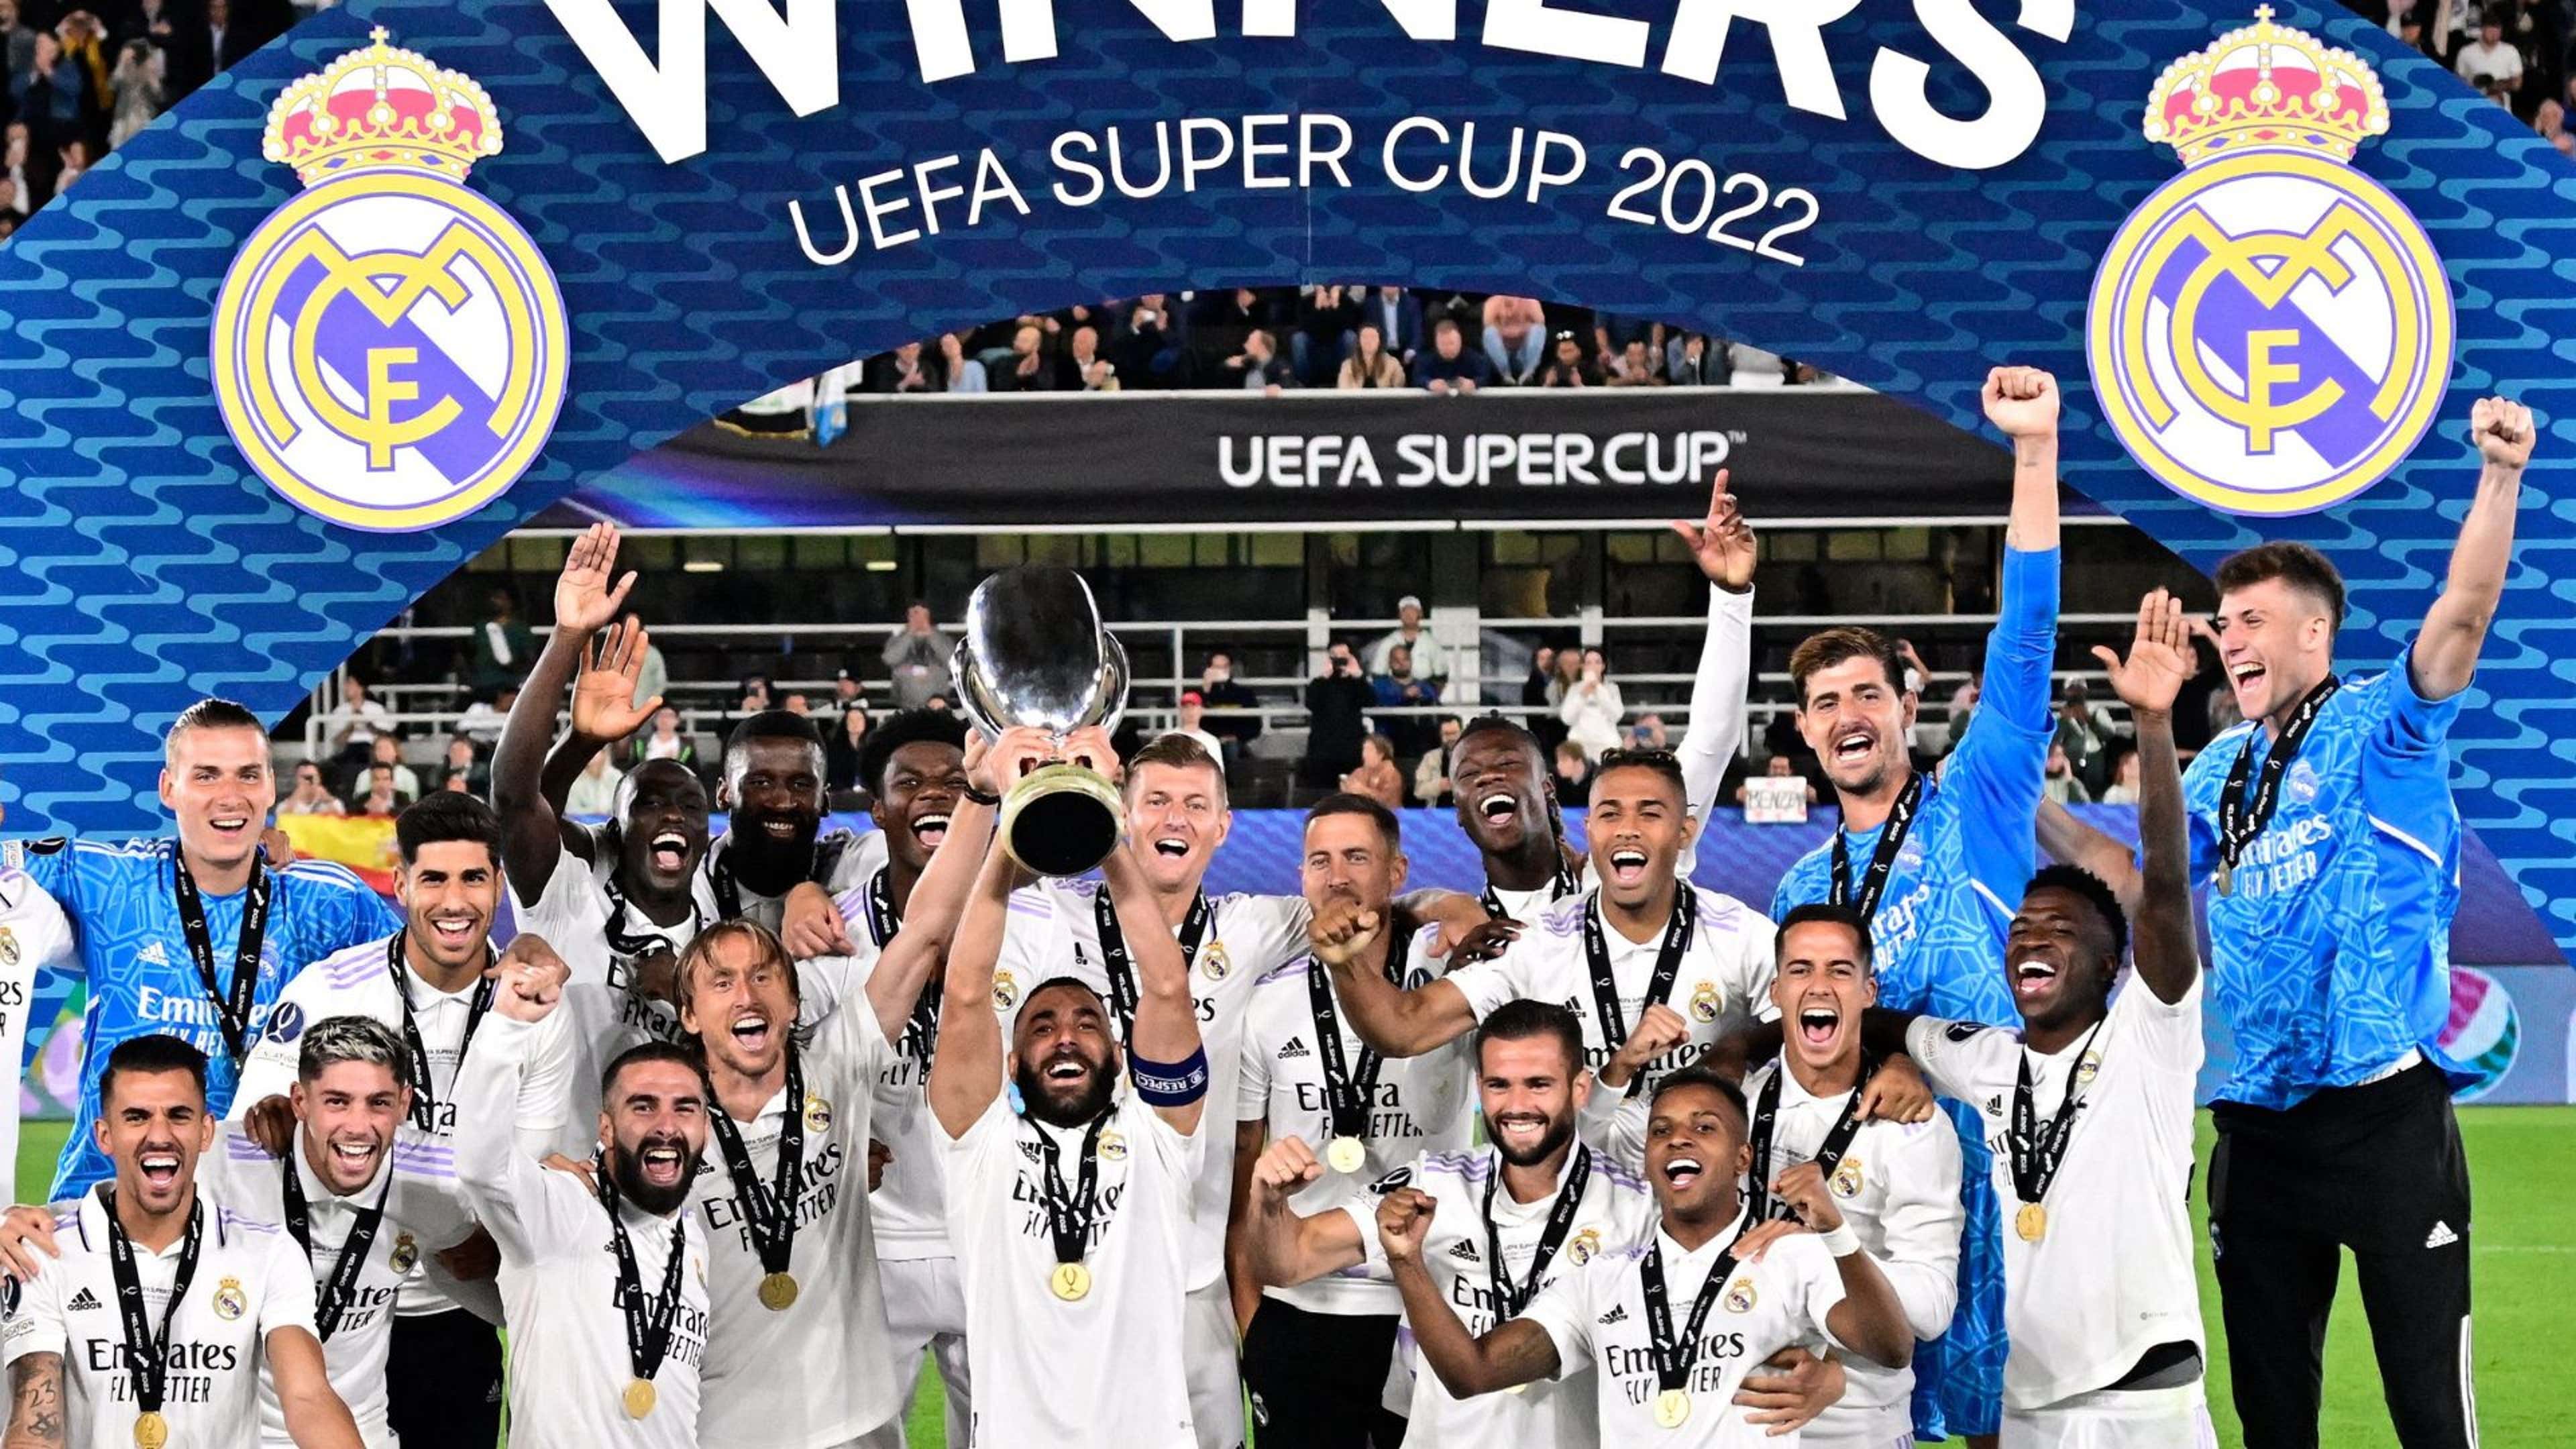 Campeon supercopa de europa 2023